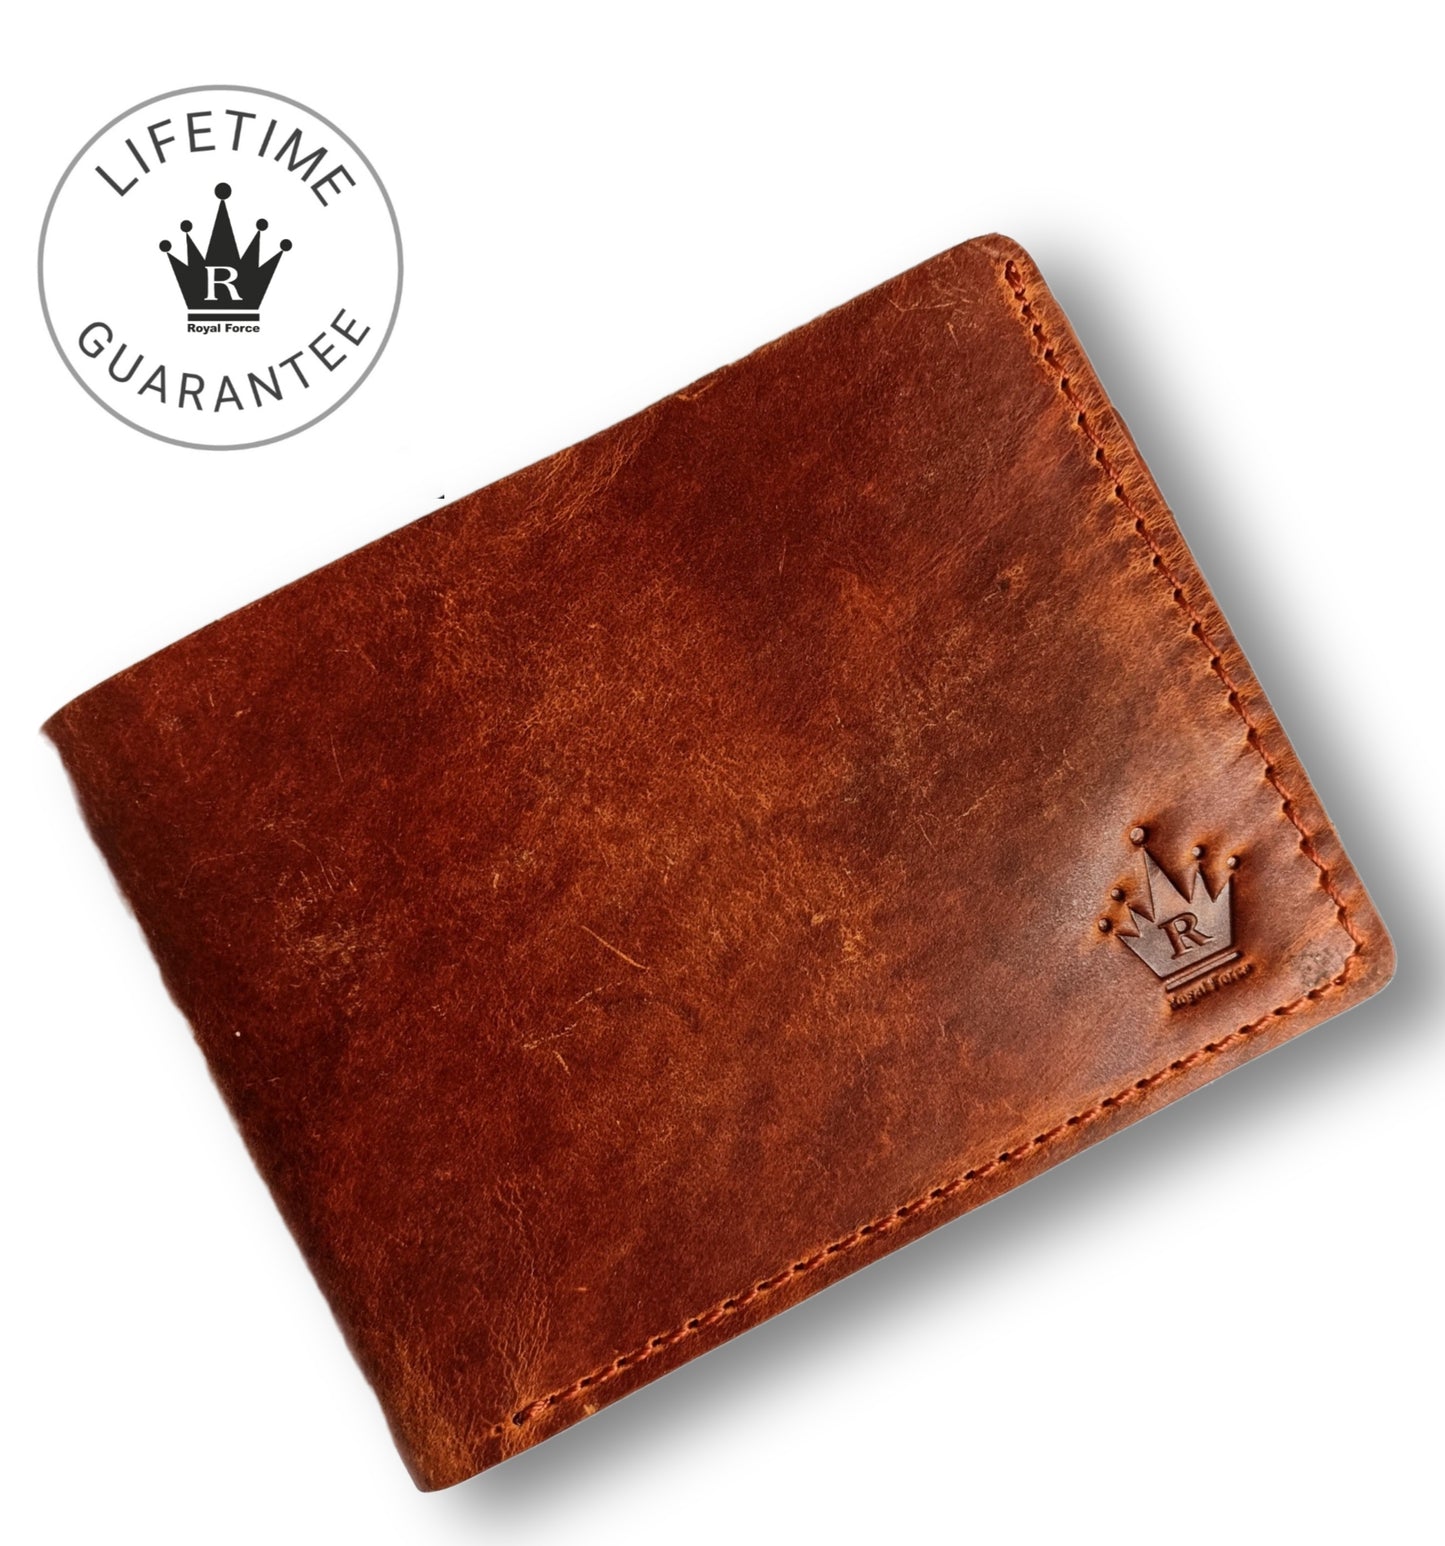 Royal Force Ultra Slim Oil Pull Up Genuine Leather Wallet Vintage Brown